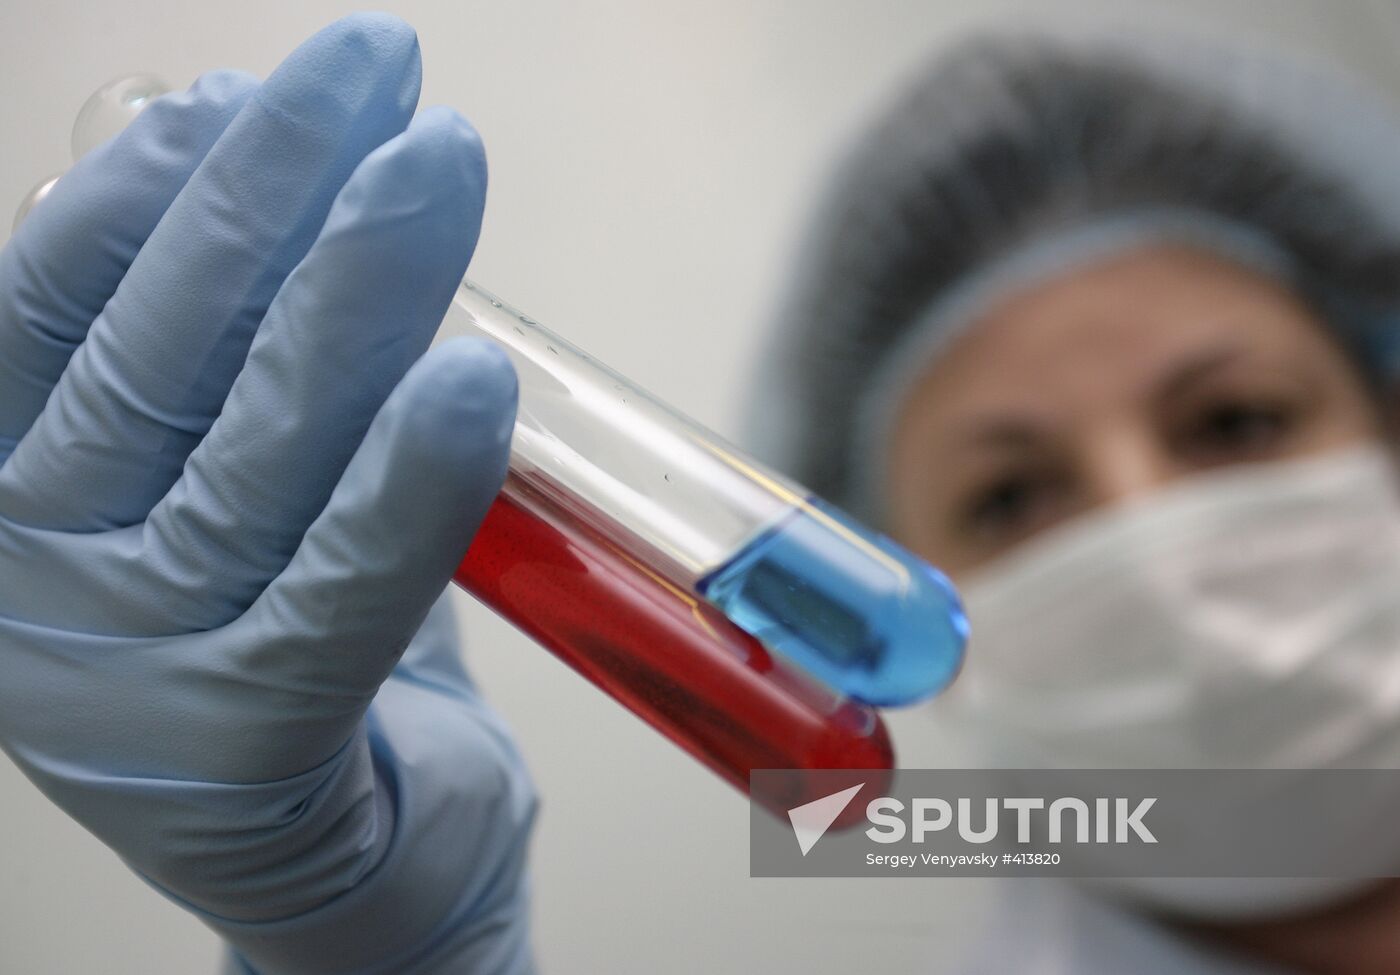 Virology lab in Rostov-on-Don